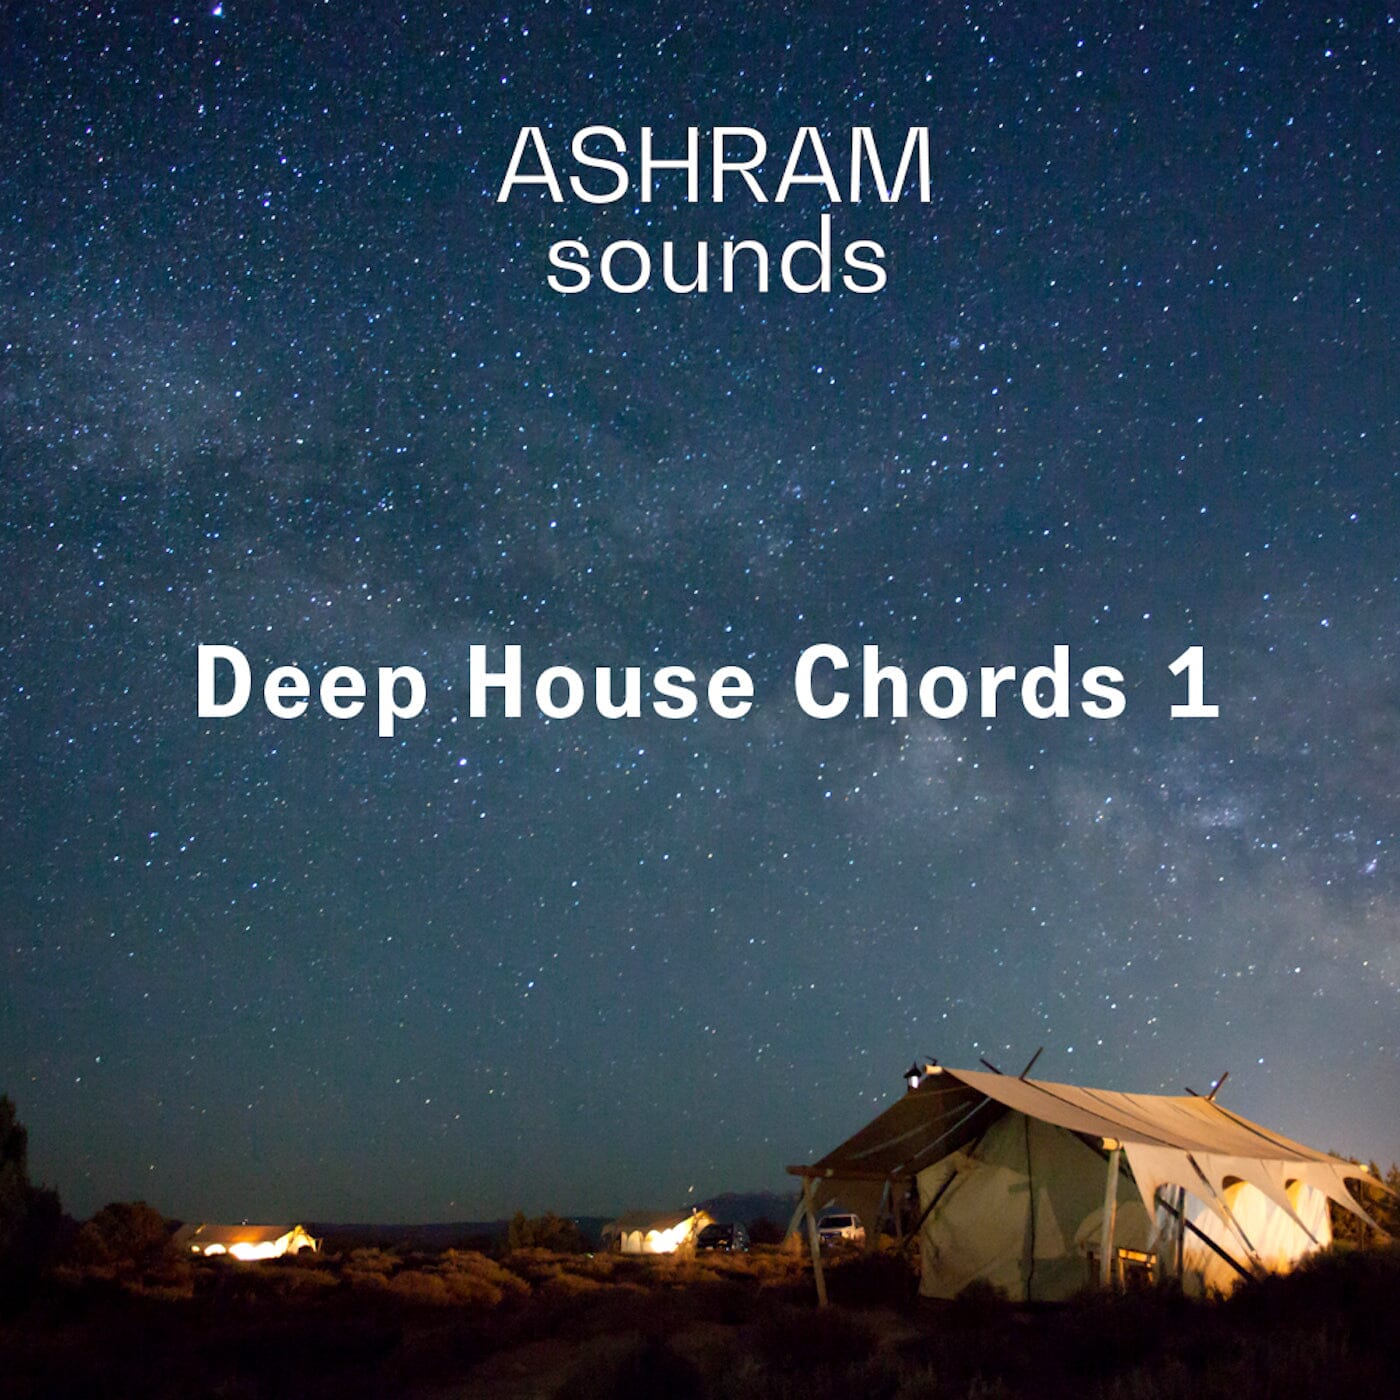 Deep House Chords vol 1 - Afro House Ethno House (24-bit Wav files) Sample Pack Ashram Sounds